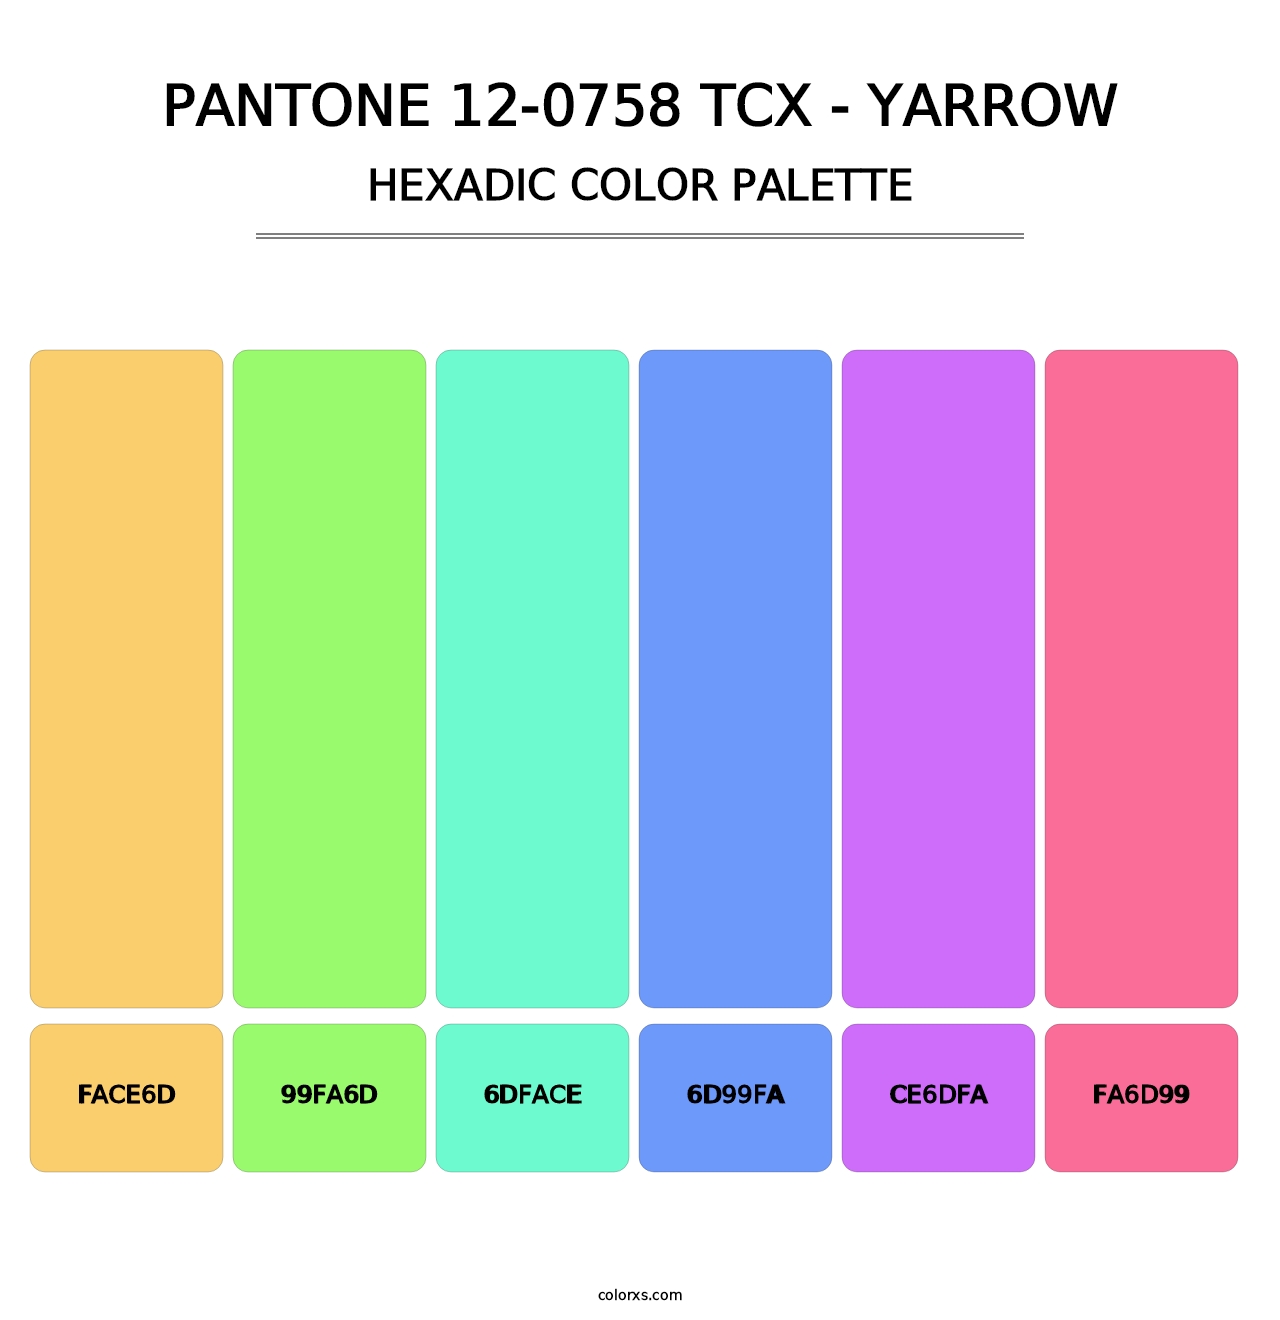 PANTONE 12-0758 TCX - Yarrow - Hexadic Color Palette